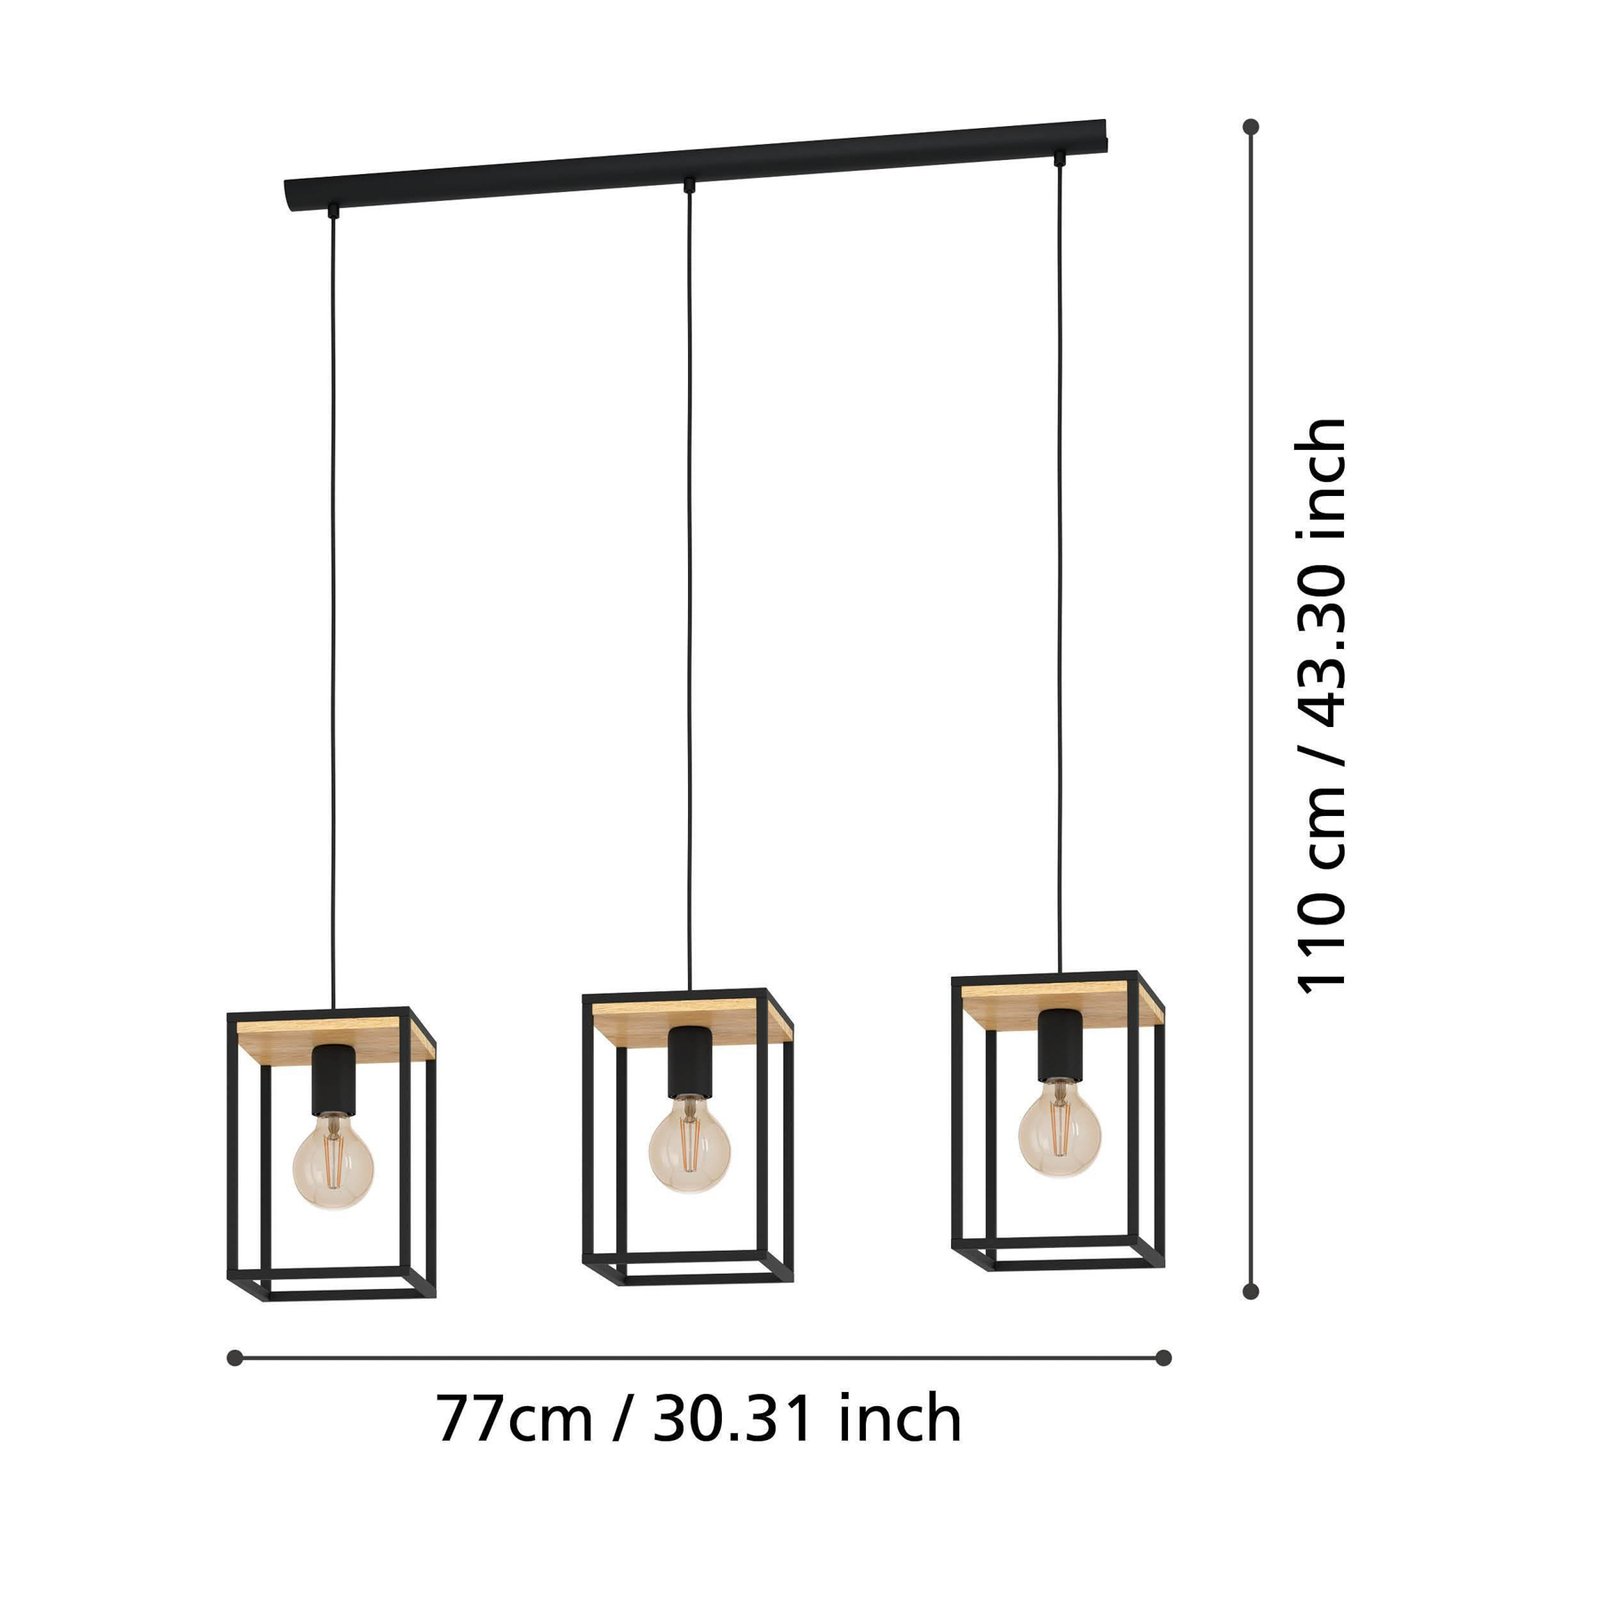 Libertad pendant light, length 88 cm, black/wood, 3-bulb.